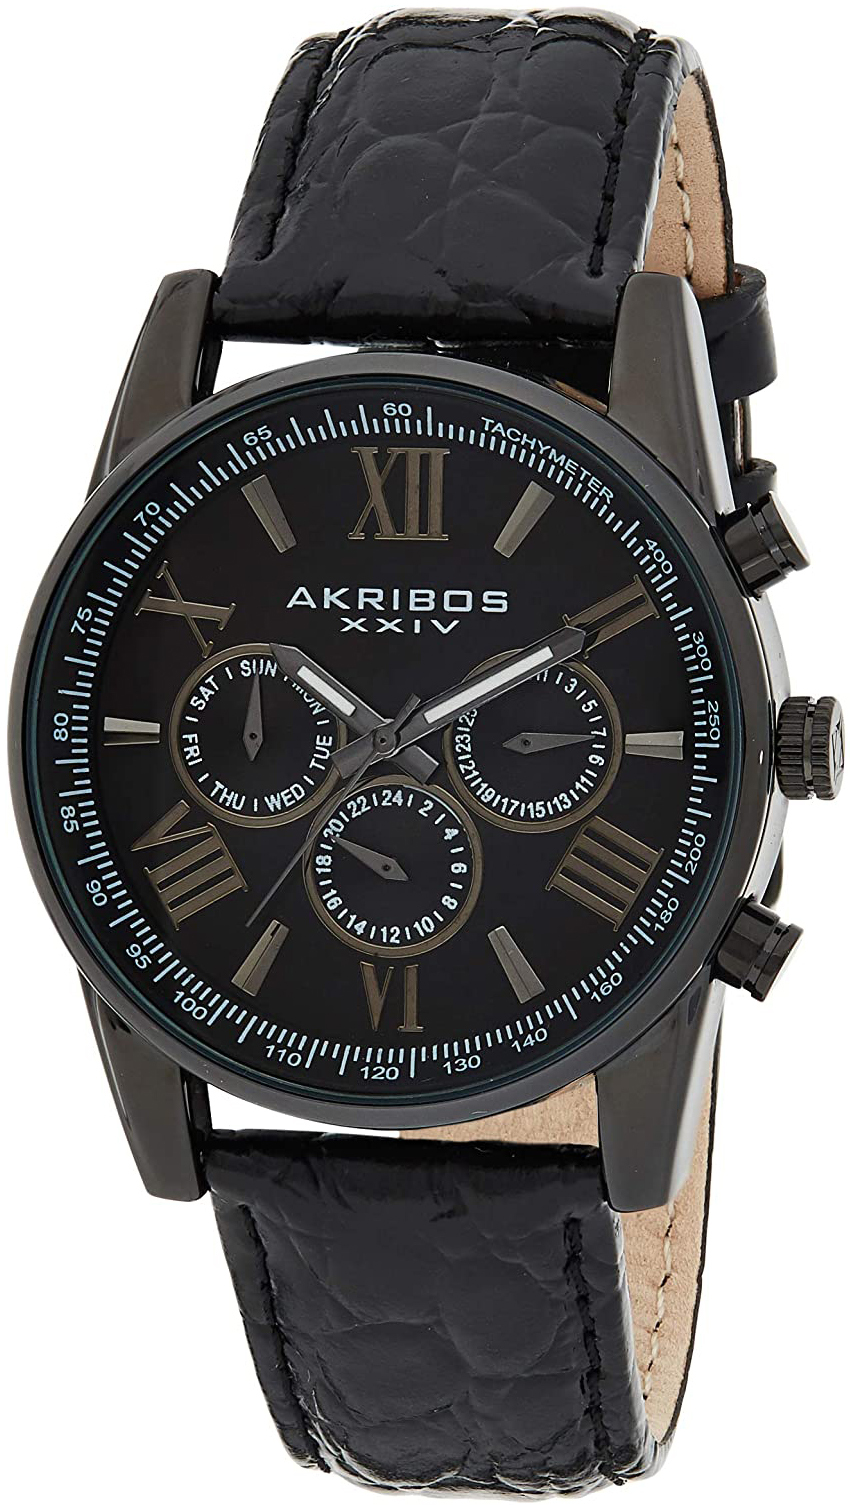 Akribos XXIV Multi-Function Herrklocka AK864BK Svart/Läder Ø41 mm - Akribos XXIV